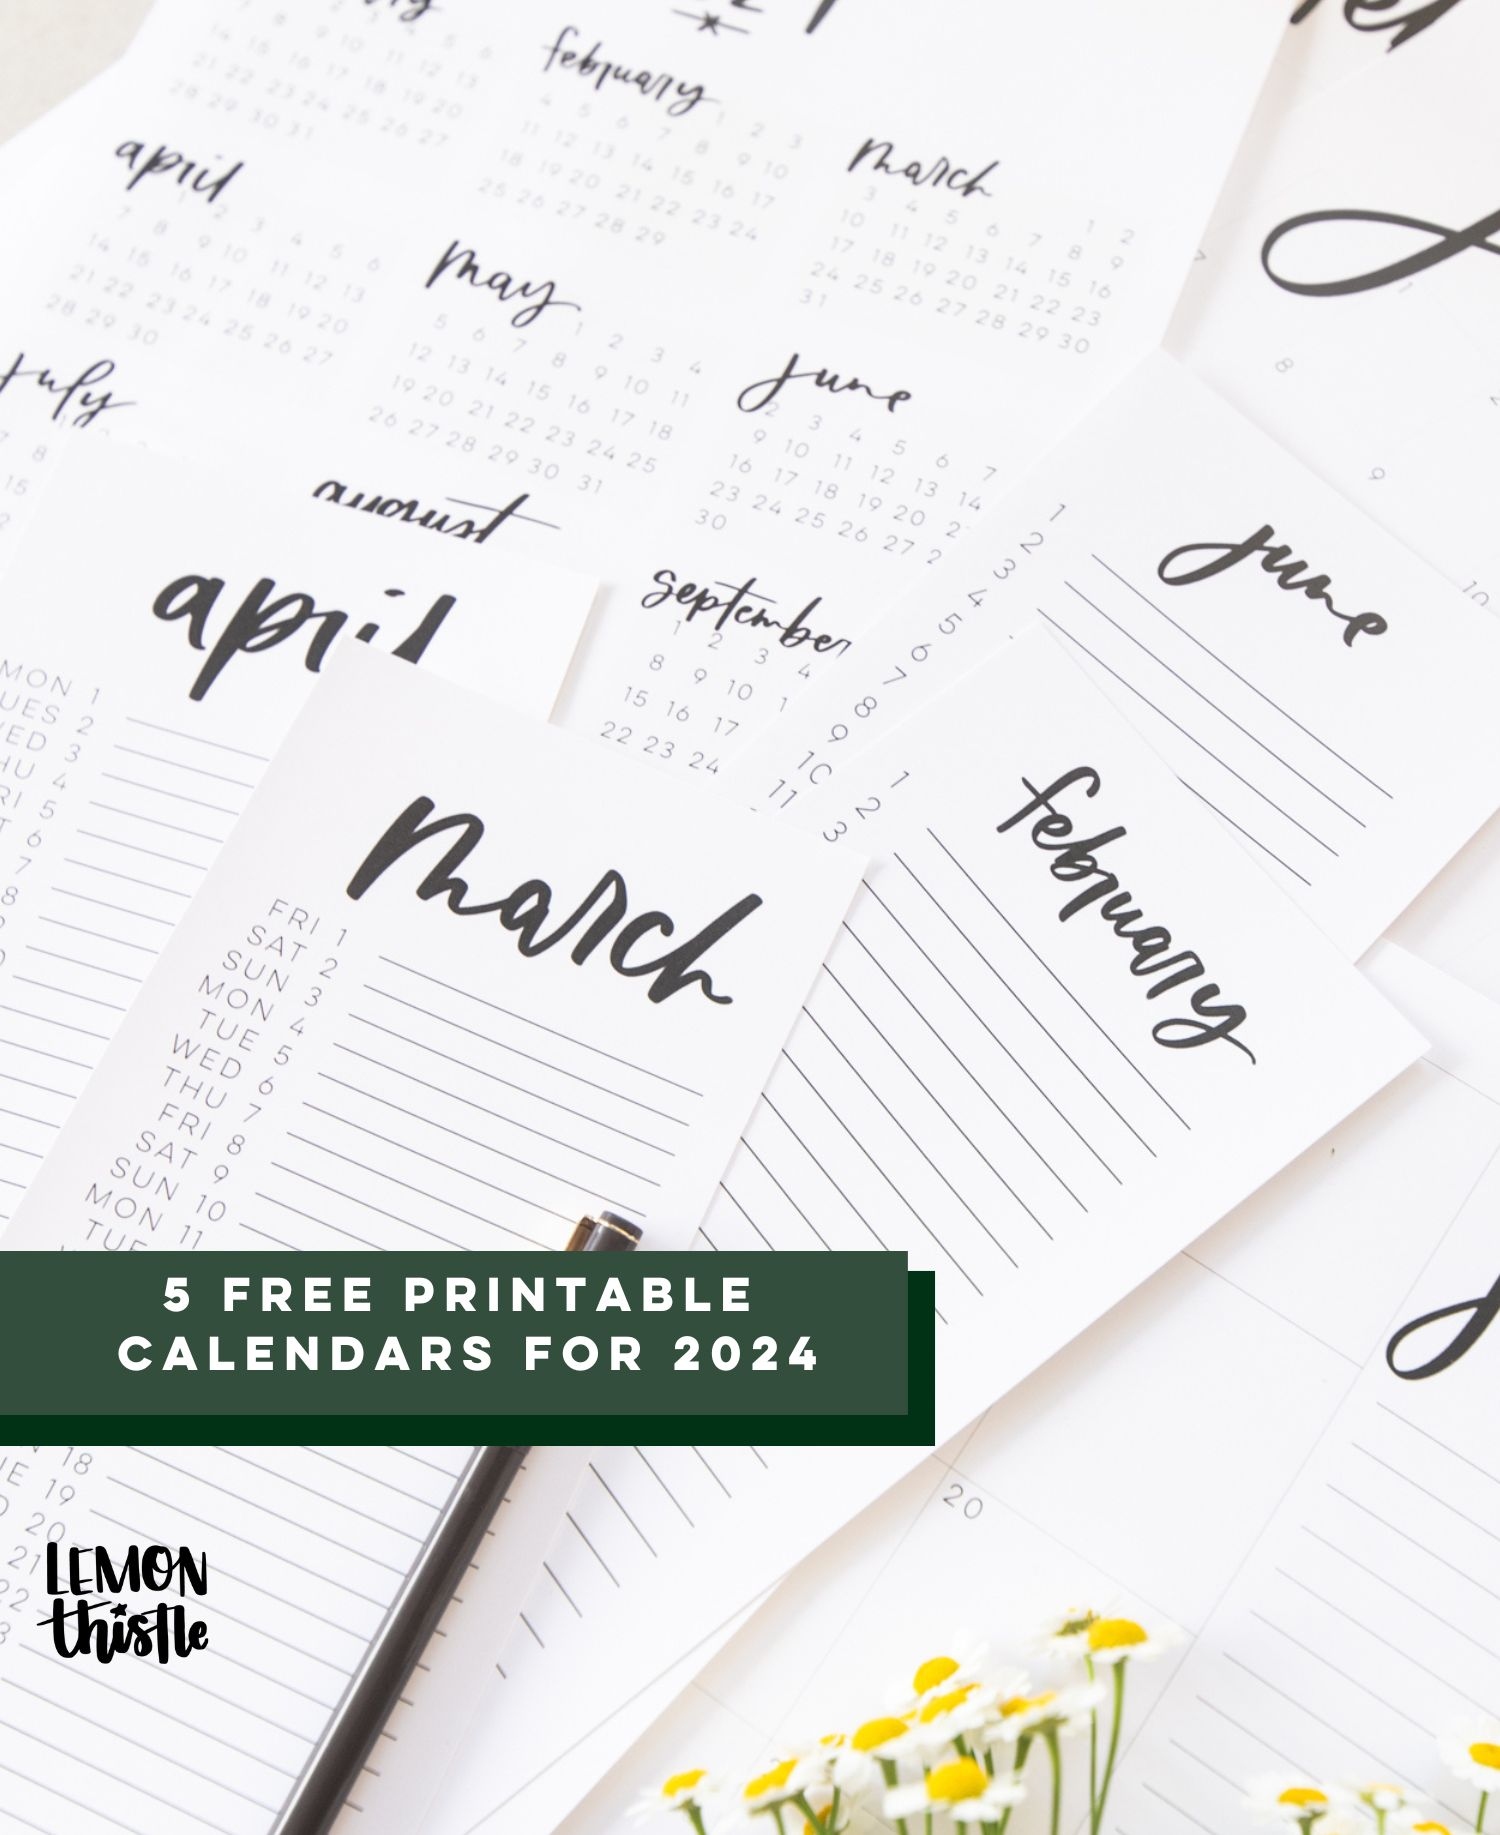 Free Printable Calendars 2024 - Lemon Thistle within Free Printable Calendar 2024 With Grid Lines